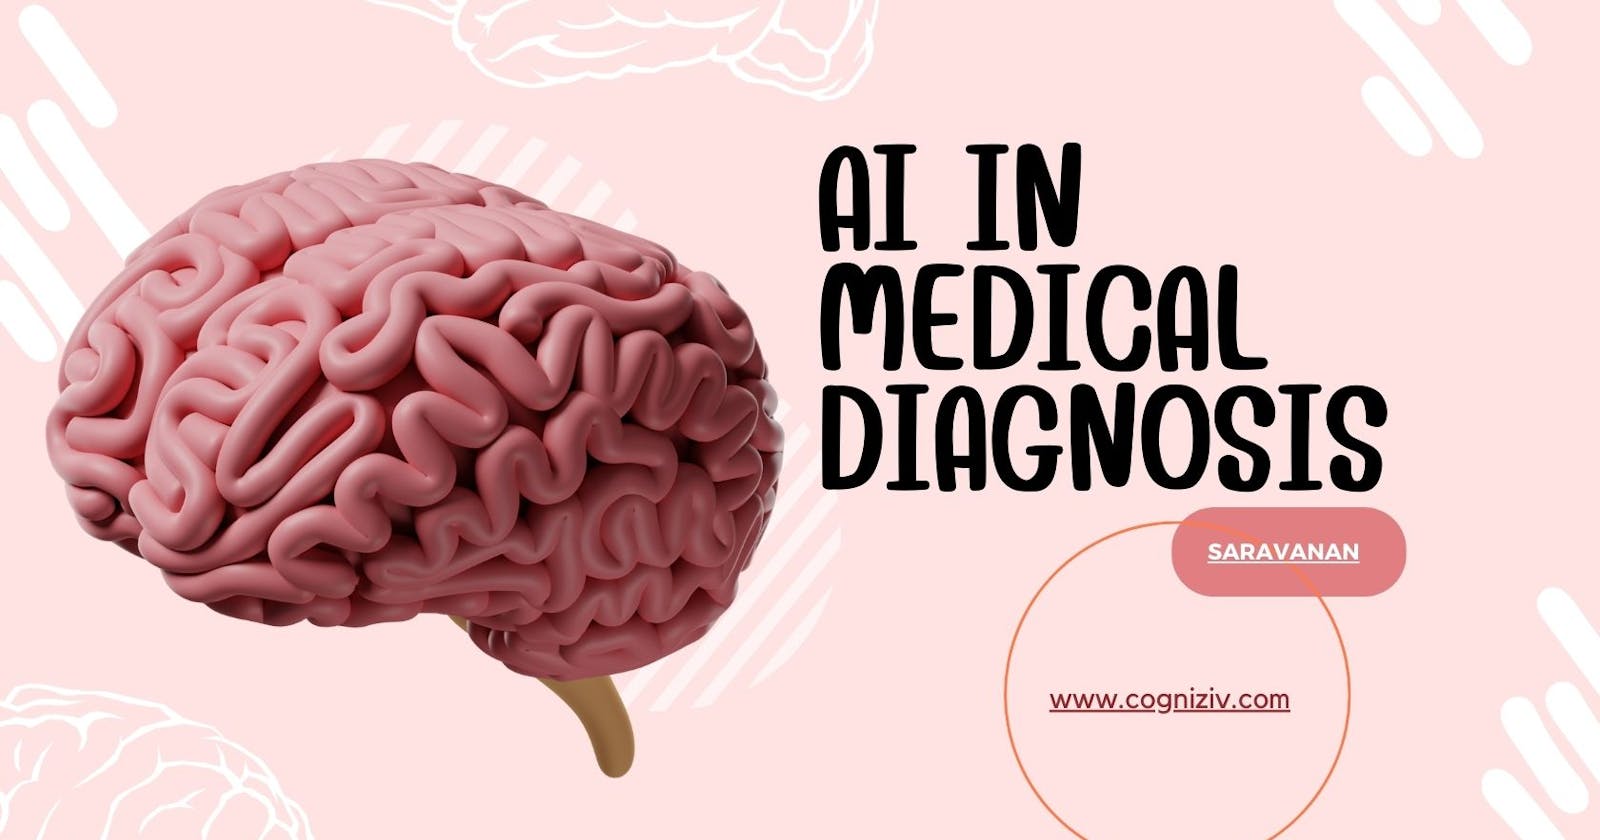 AI in Medical Diagnosis - An Analysis